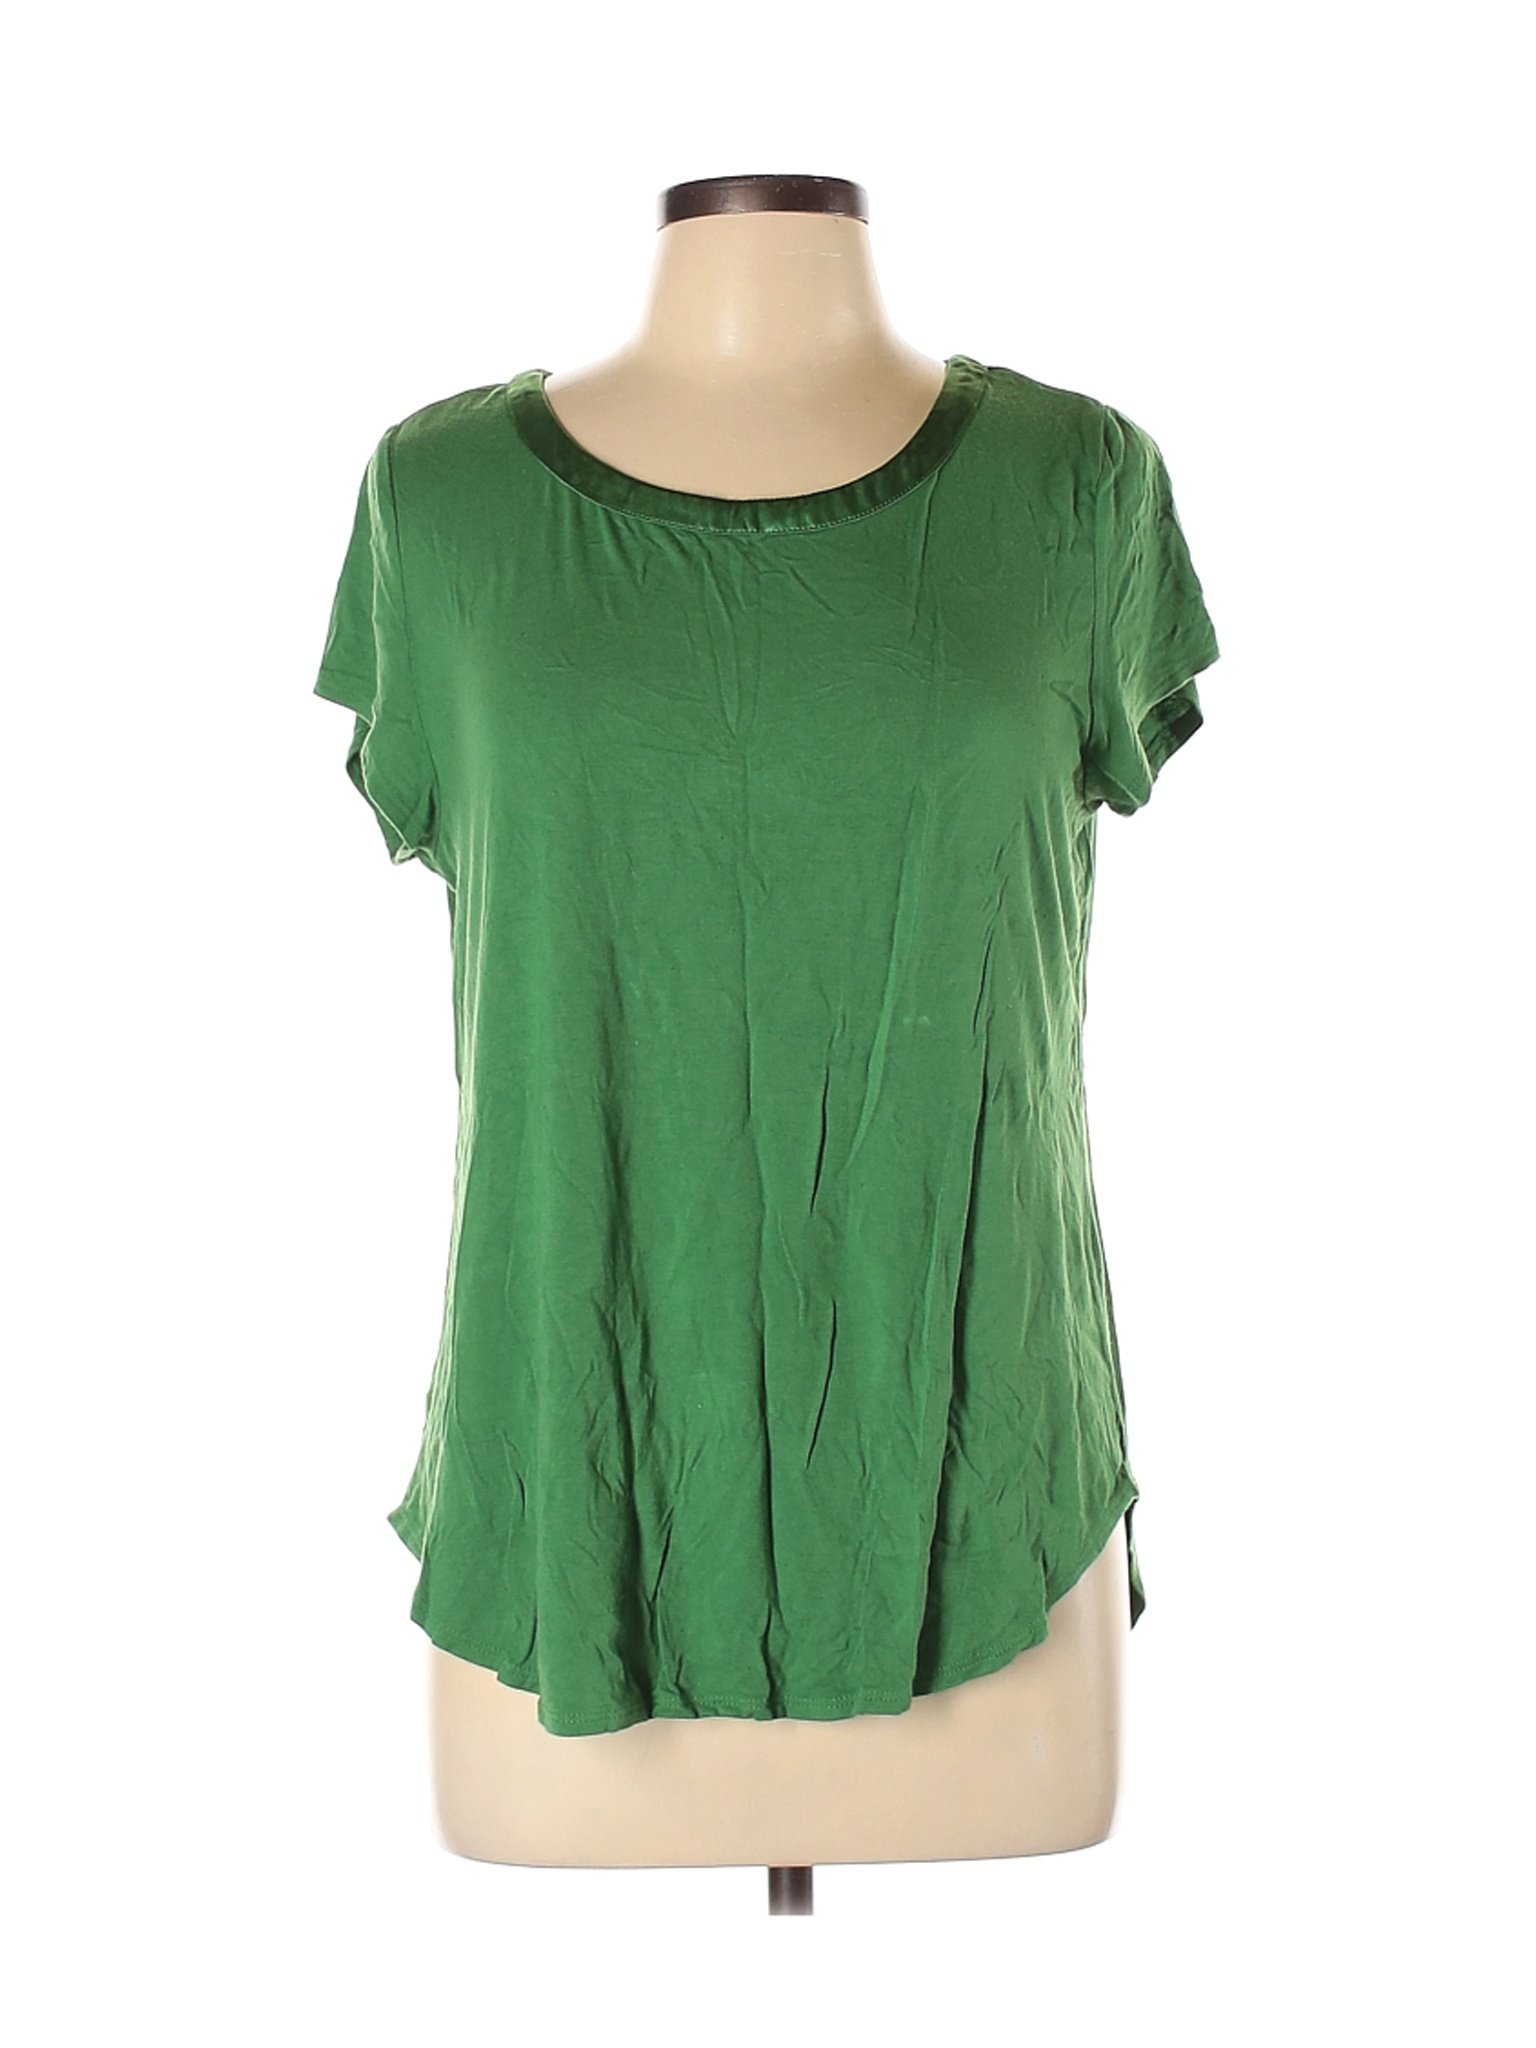 Alfani Women Green Short Sleeve Top L | eBay